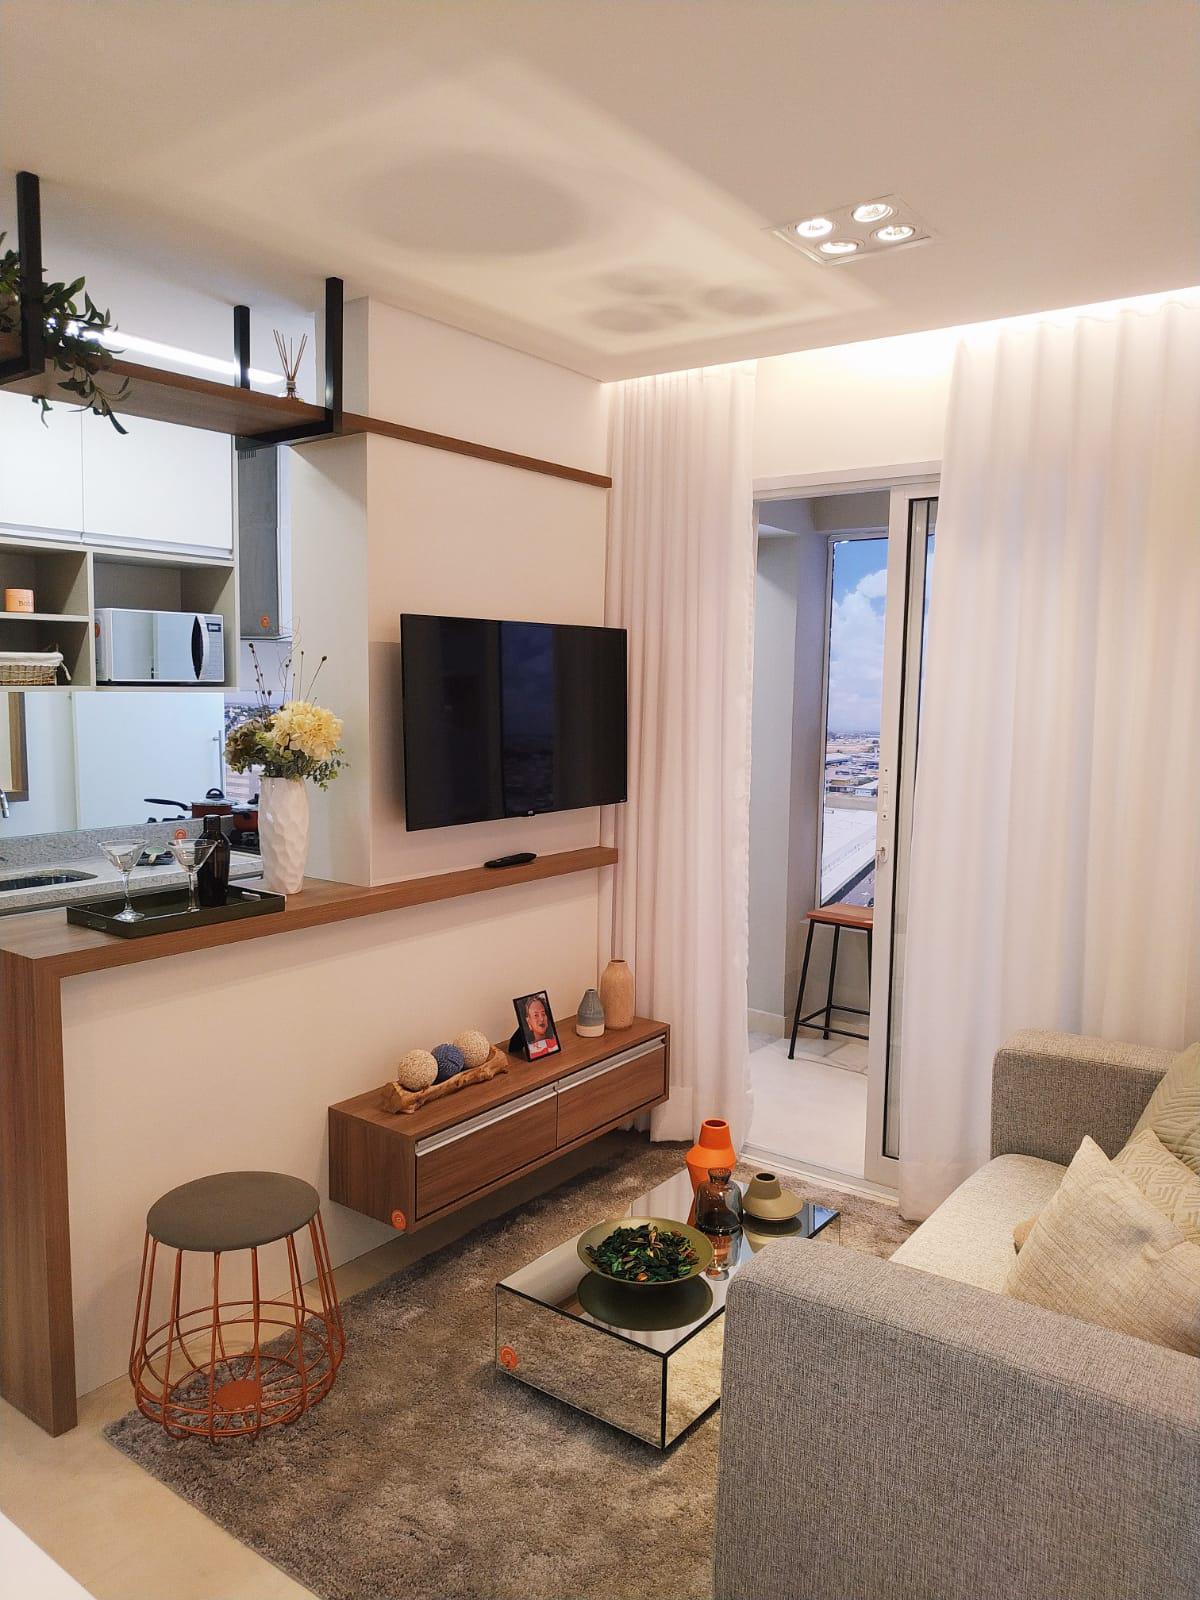 Apartamento em Sumare - Gran Vic Barcelona - Investe Imovel